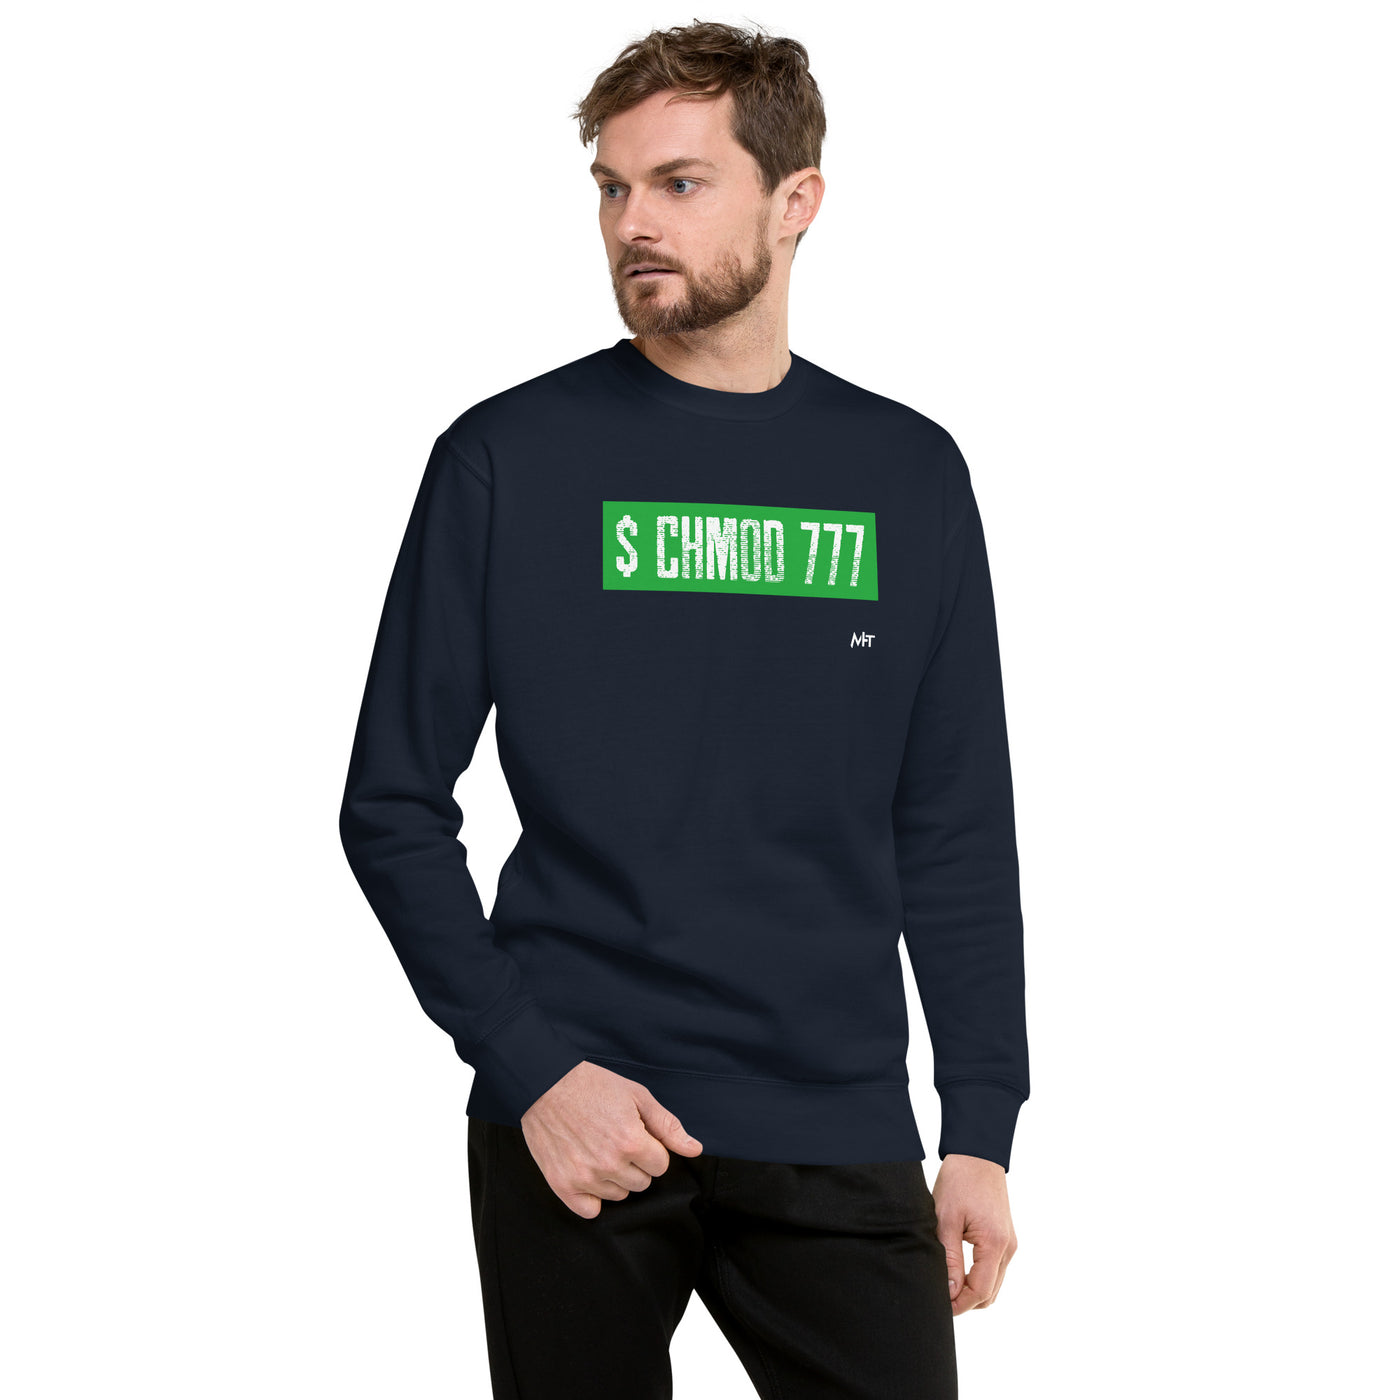 Chmod 777 - Unisex Premium Sweatshirt